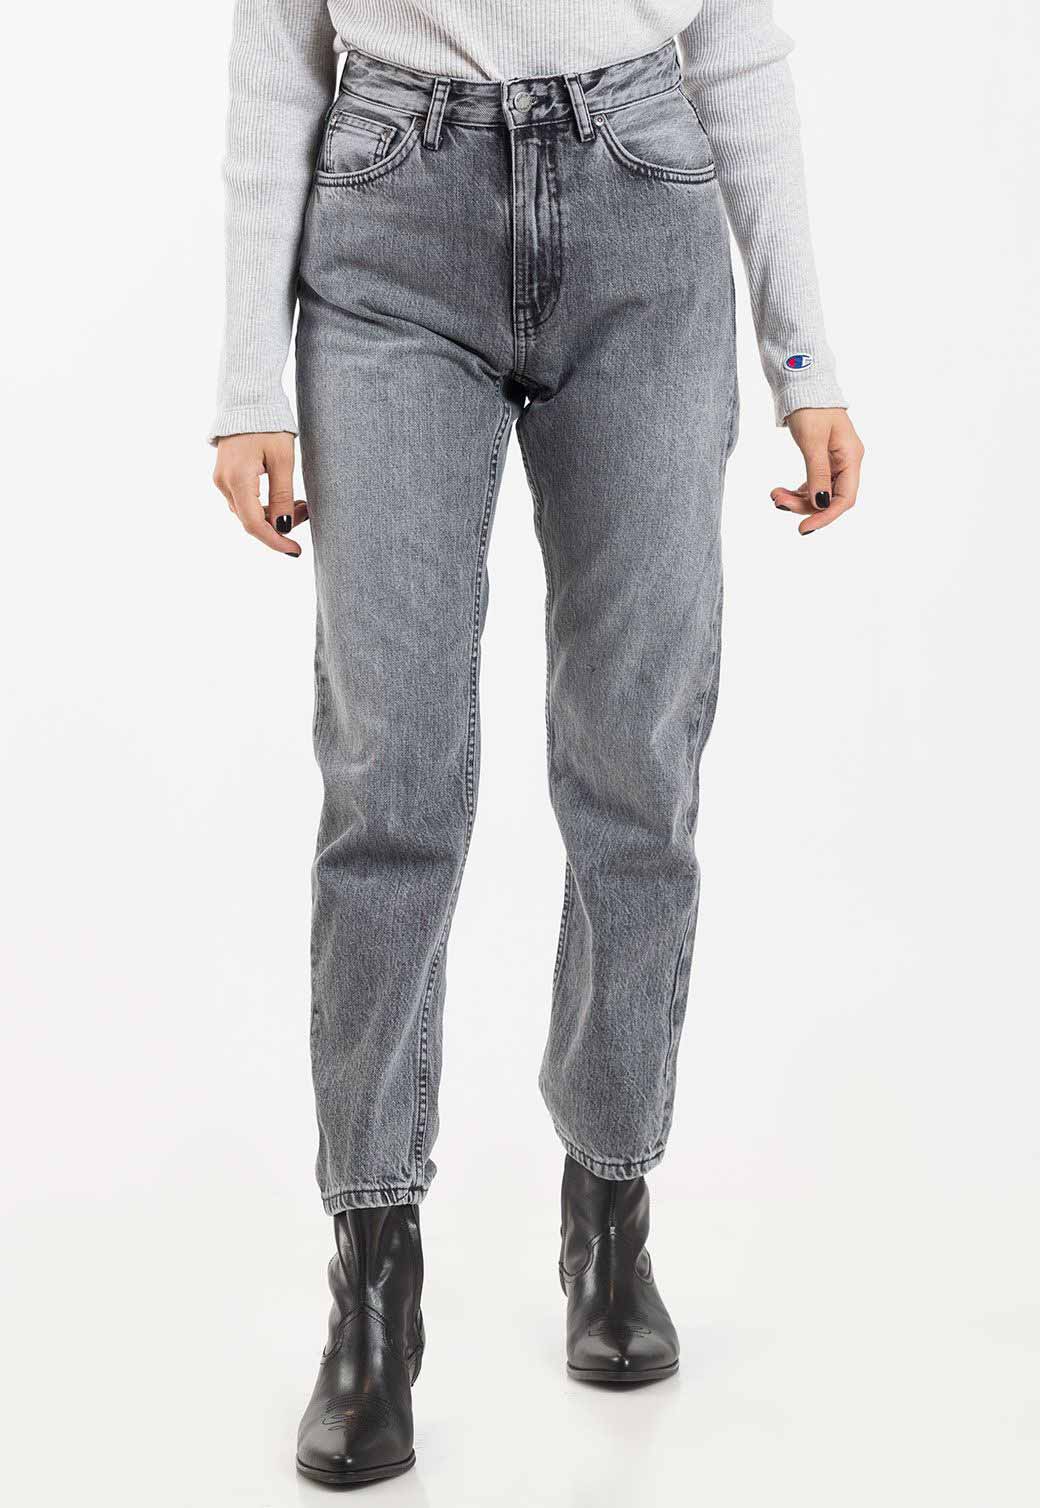 Dim Gray ג'ינס ארוך לנשים Breezy Britt - Lazy Grey NUDIE